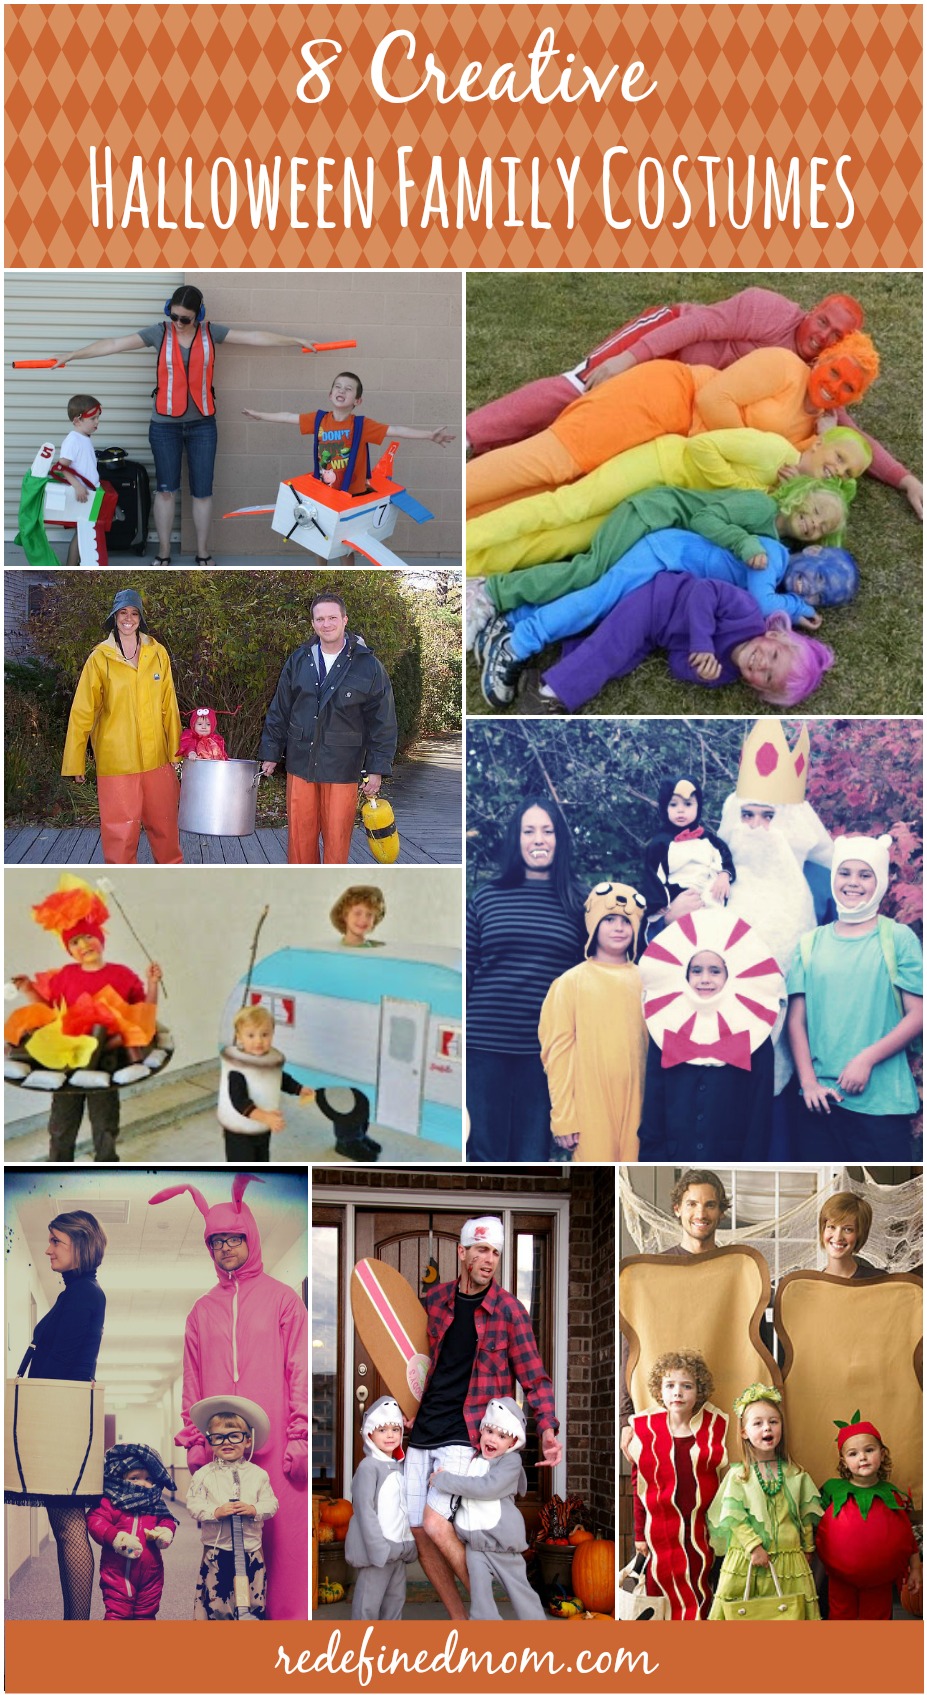 8 Creative Family Halloween Costume Ideas (or Groups)